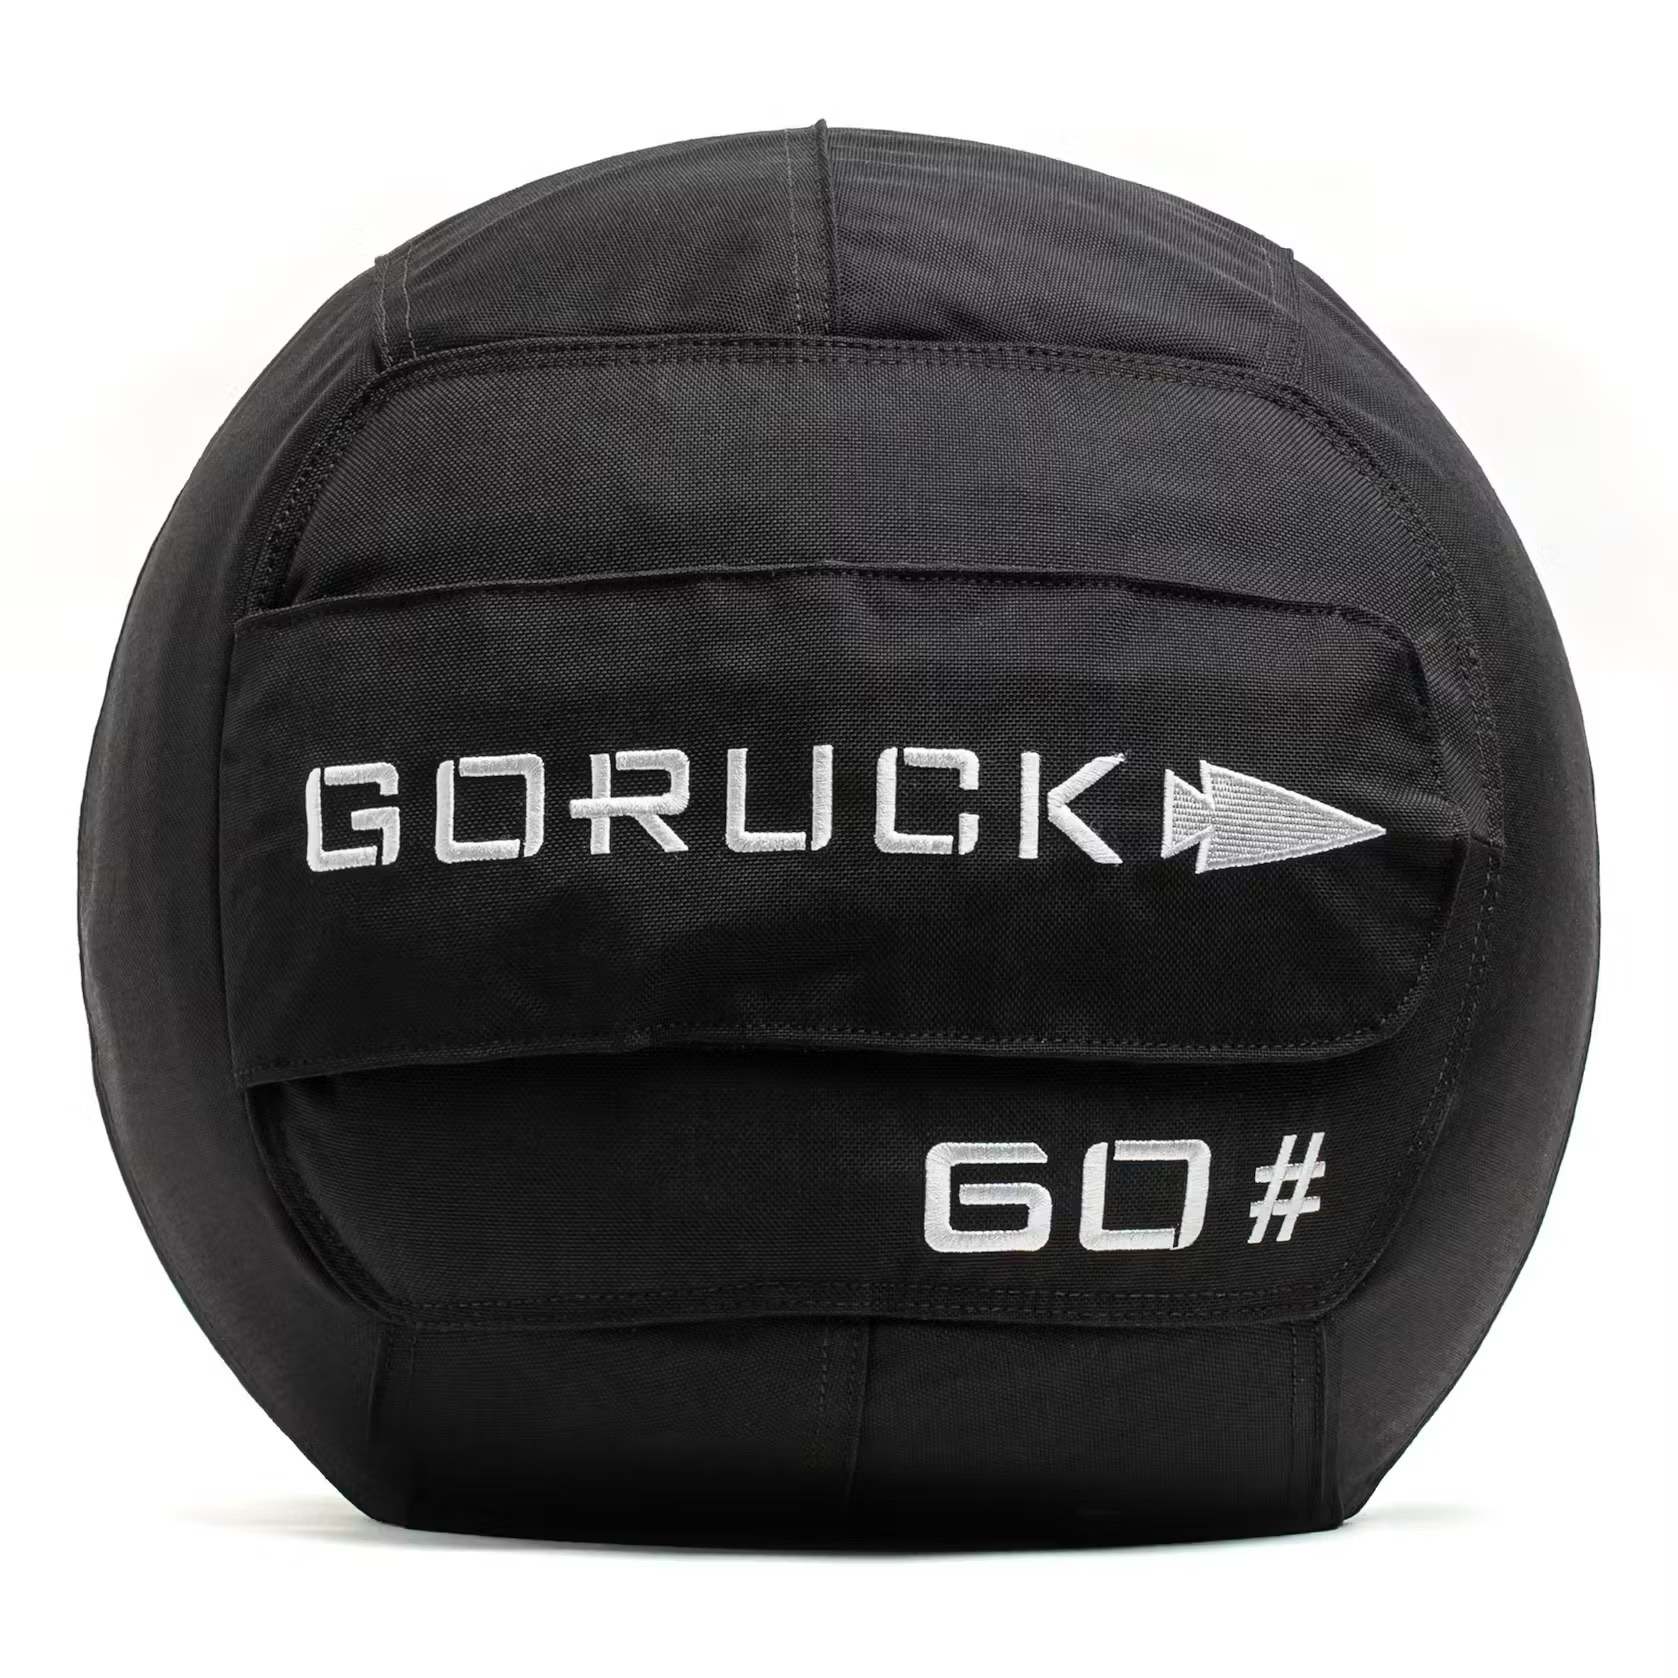 Sand Medicine Ball - 60LB GORUCK SAND MEDICINE BALL - $37.00